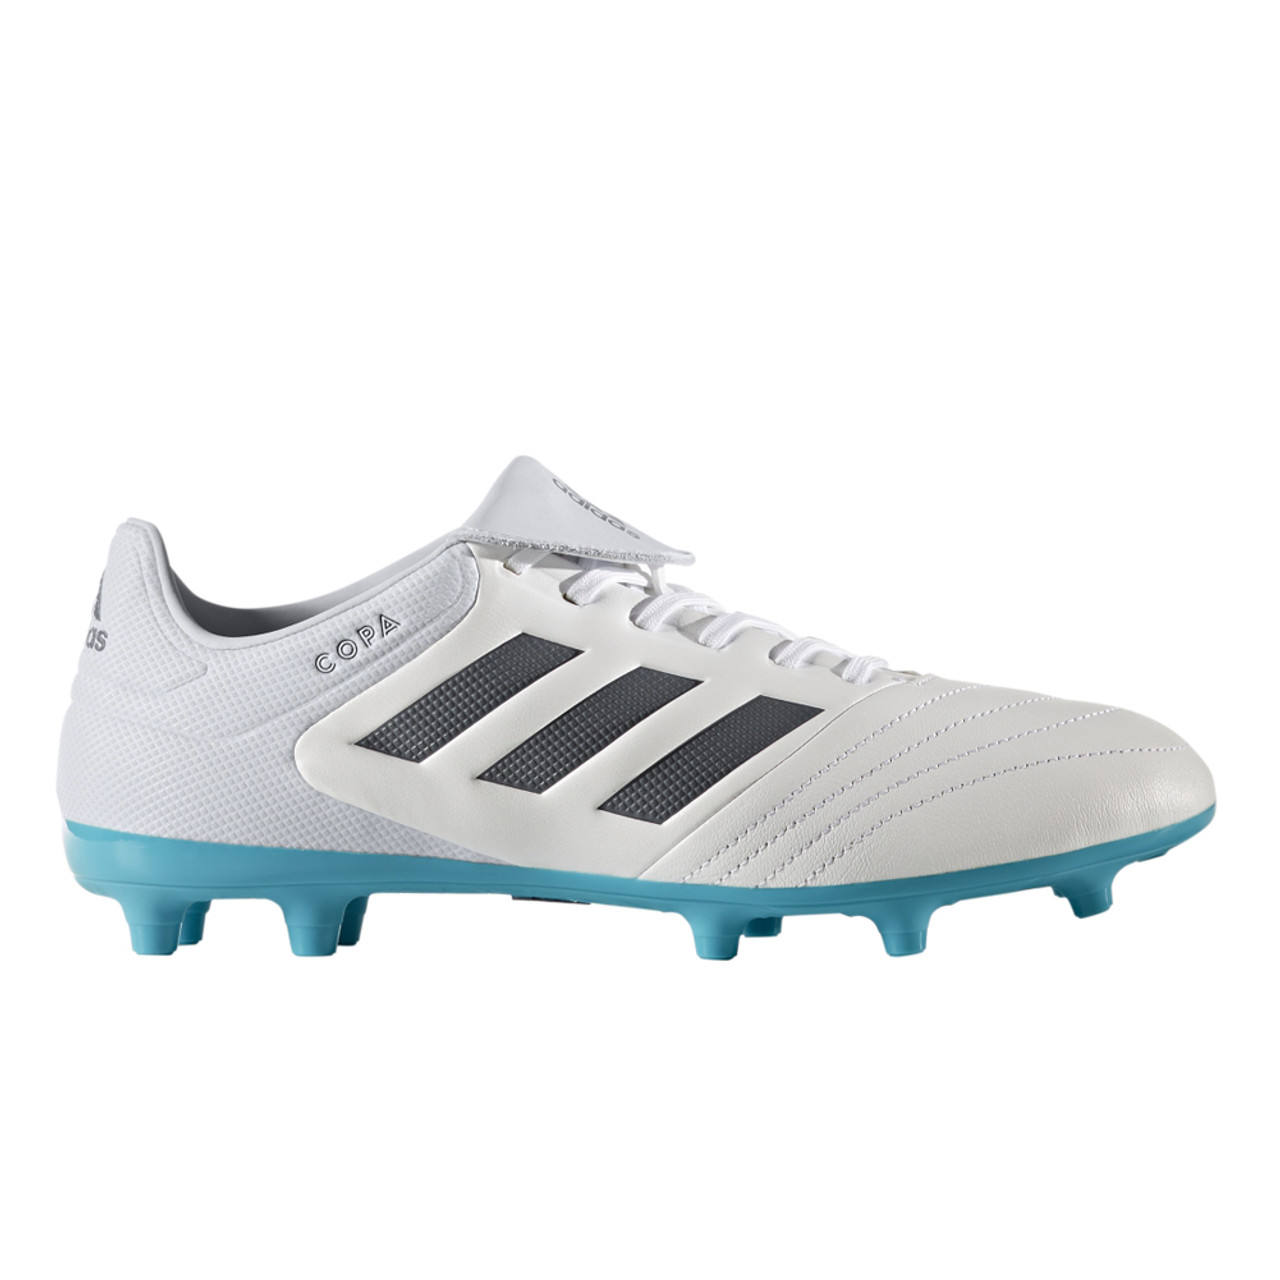 Adidas Men's Copa FG Cleat - White | Discount Adidas Men's Athletic Shoes & More - Shoolu.com | Shoolu.com